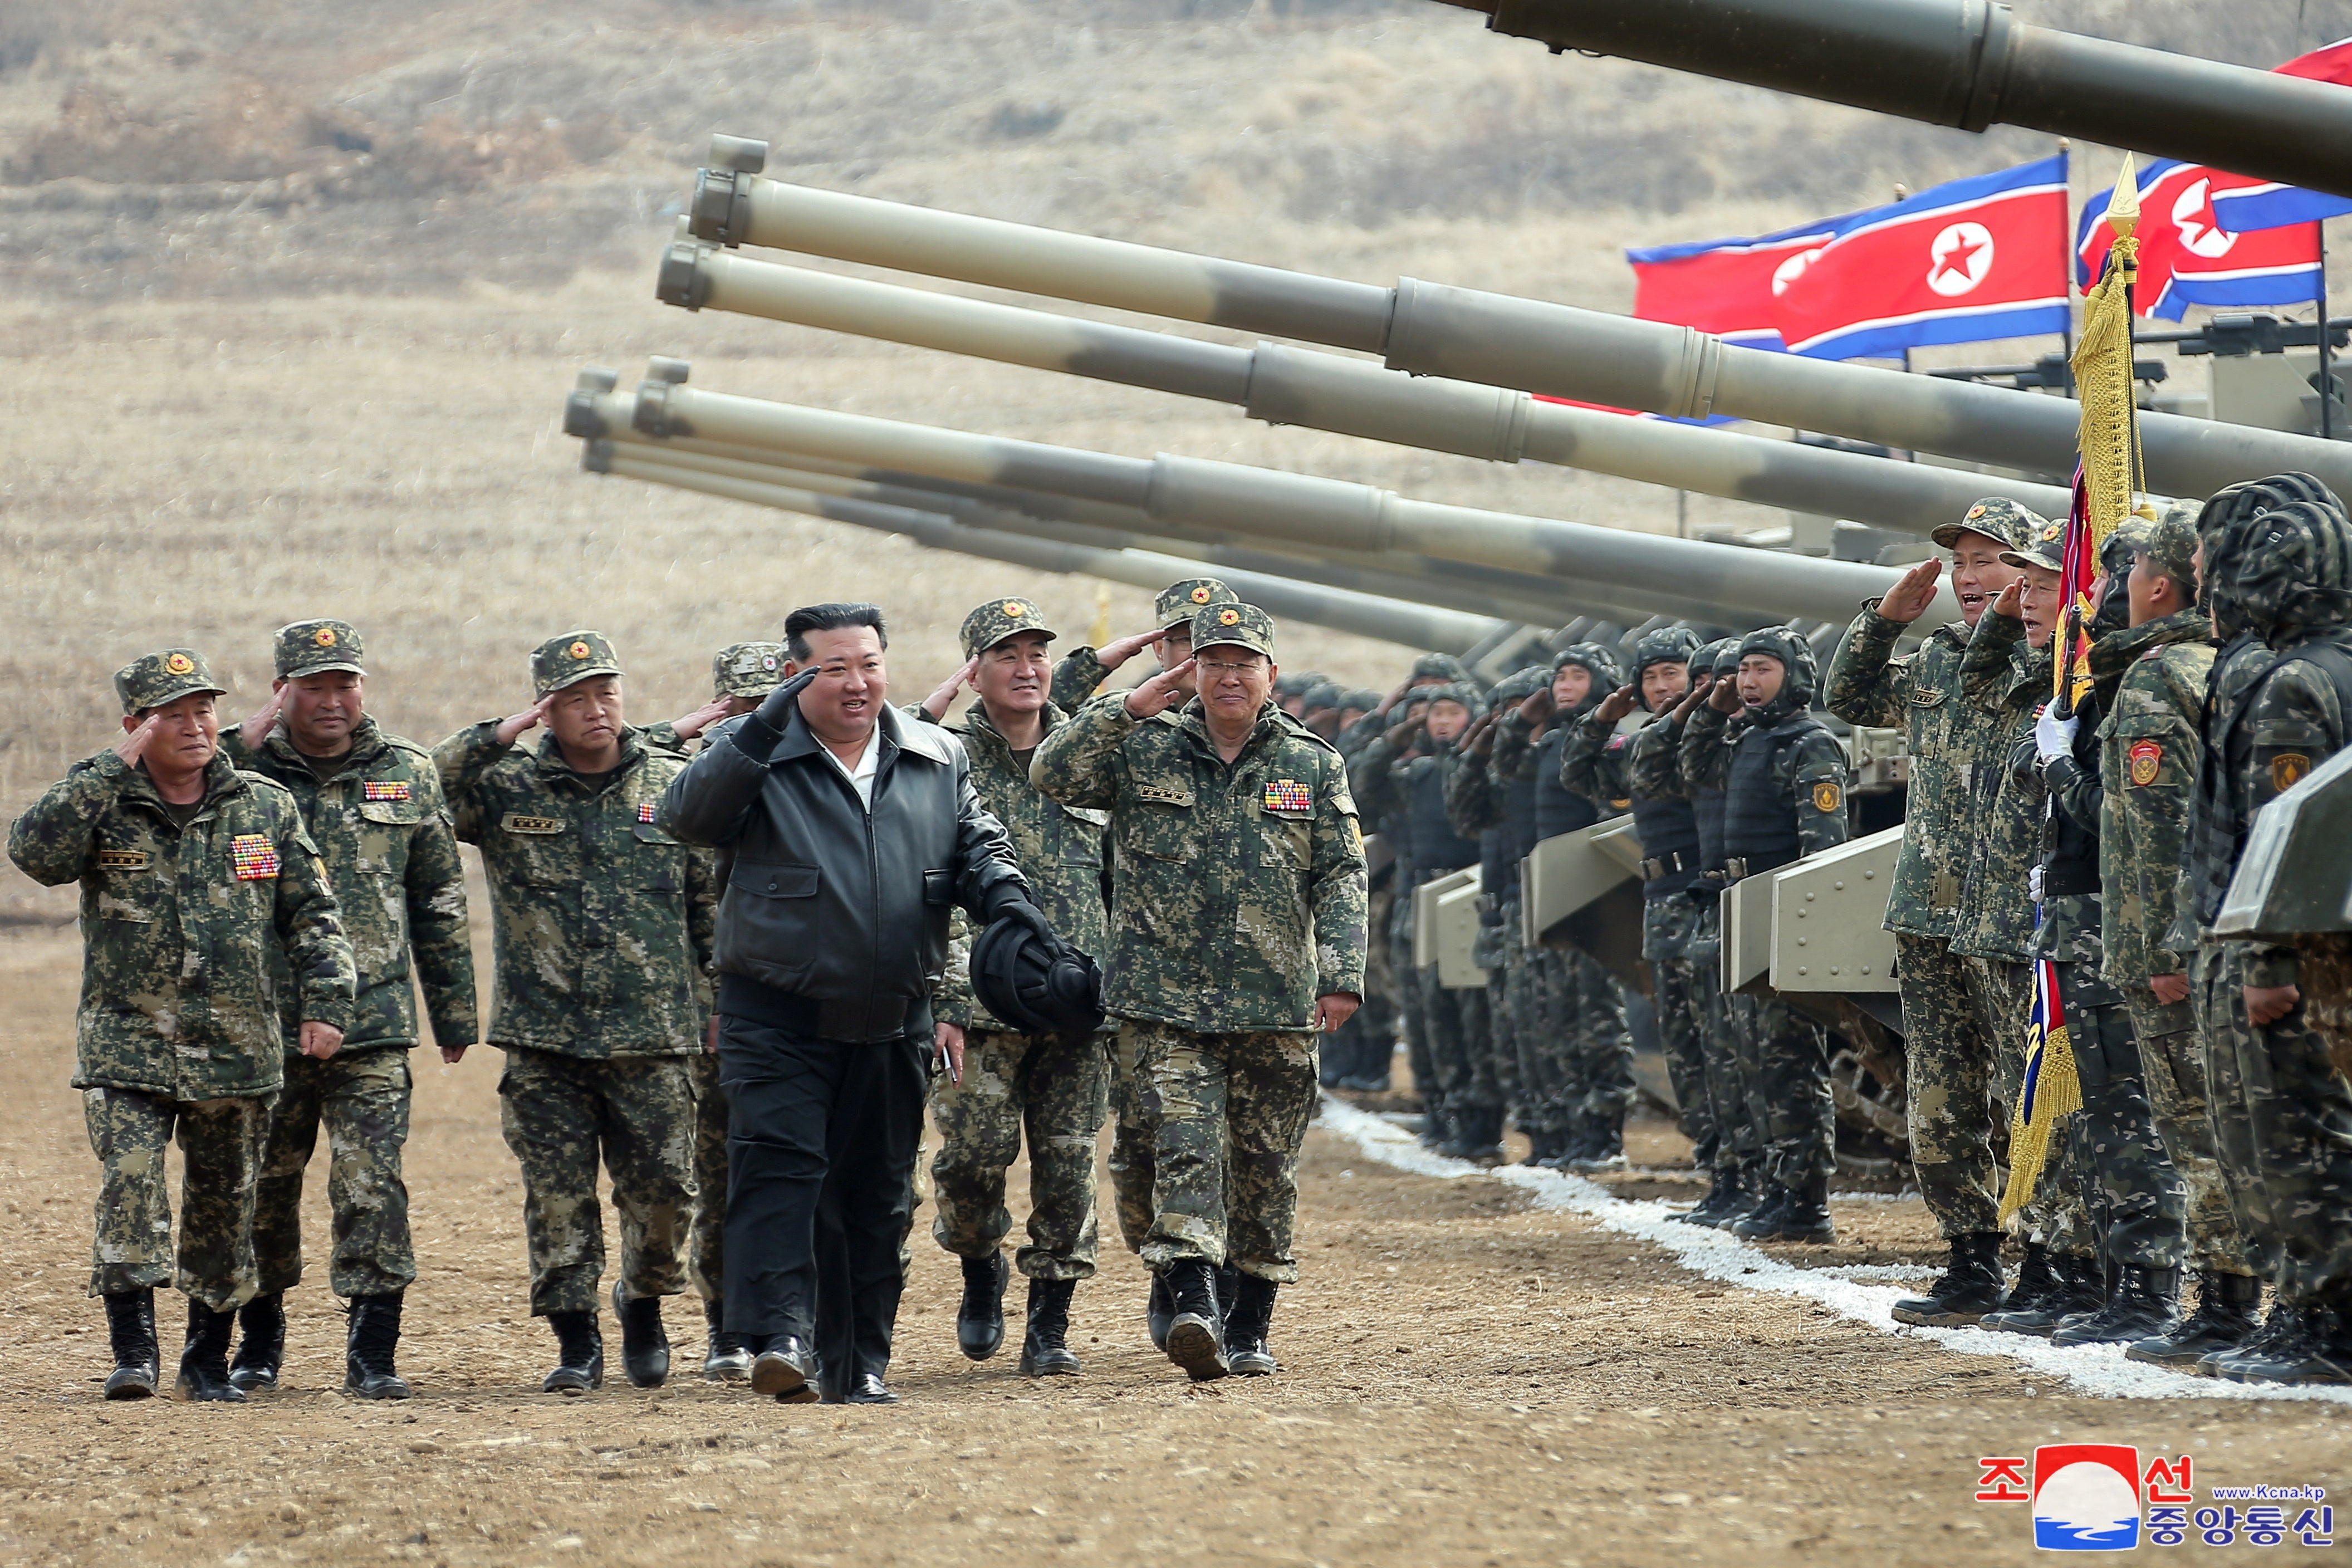 North Korean leader Kim Jong Un guides a military demonstration involving tank units, in North Korea